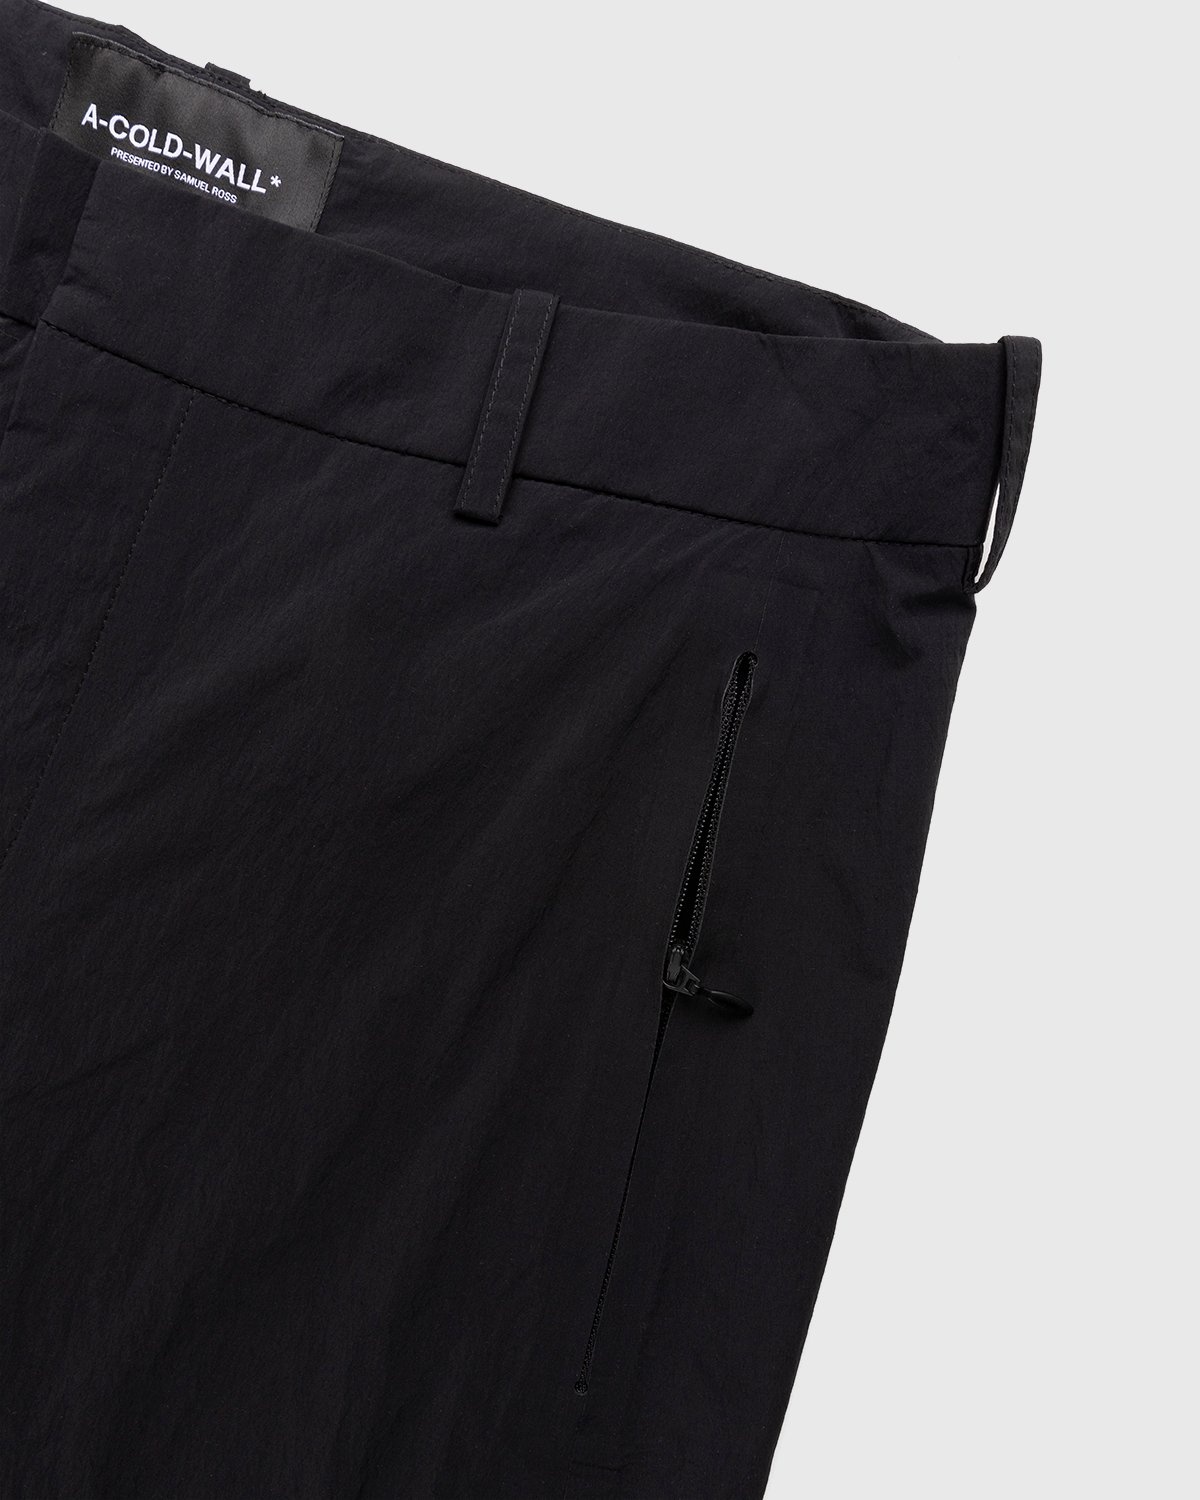 A-Cold-Wall* – Stealth Nylon Pant Black - Pants - Black - Image 4